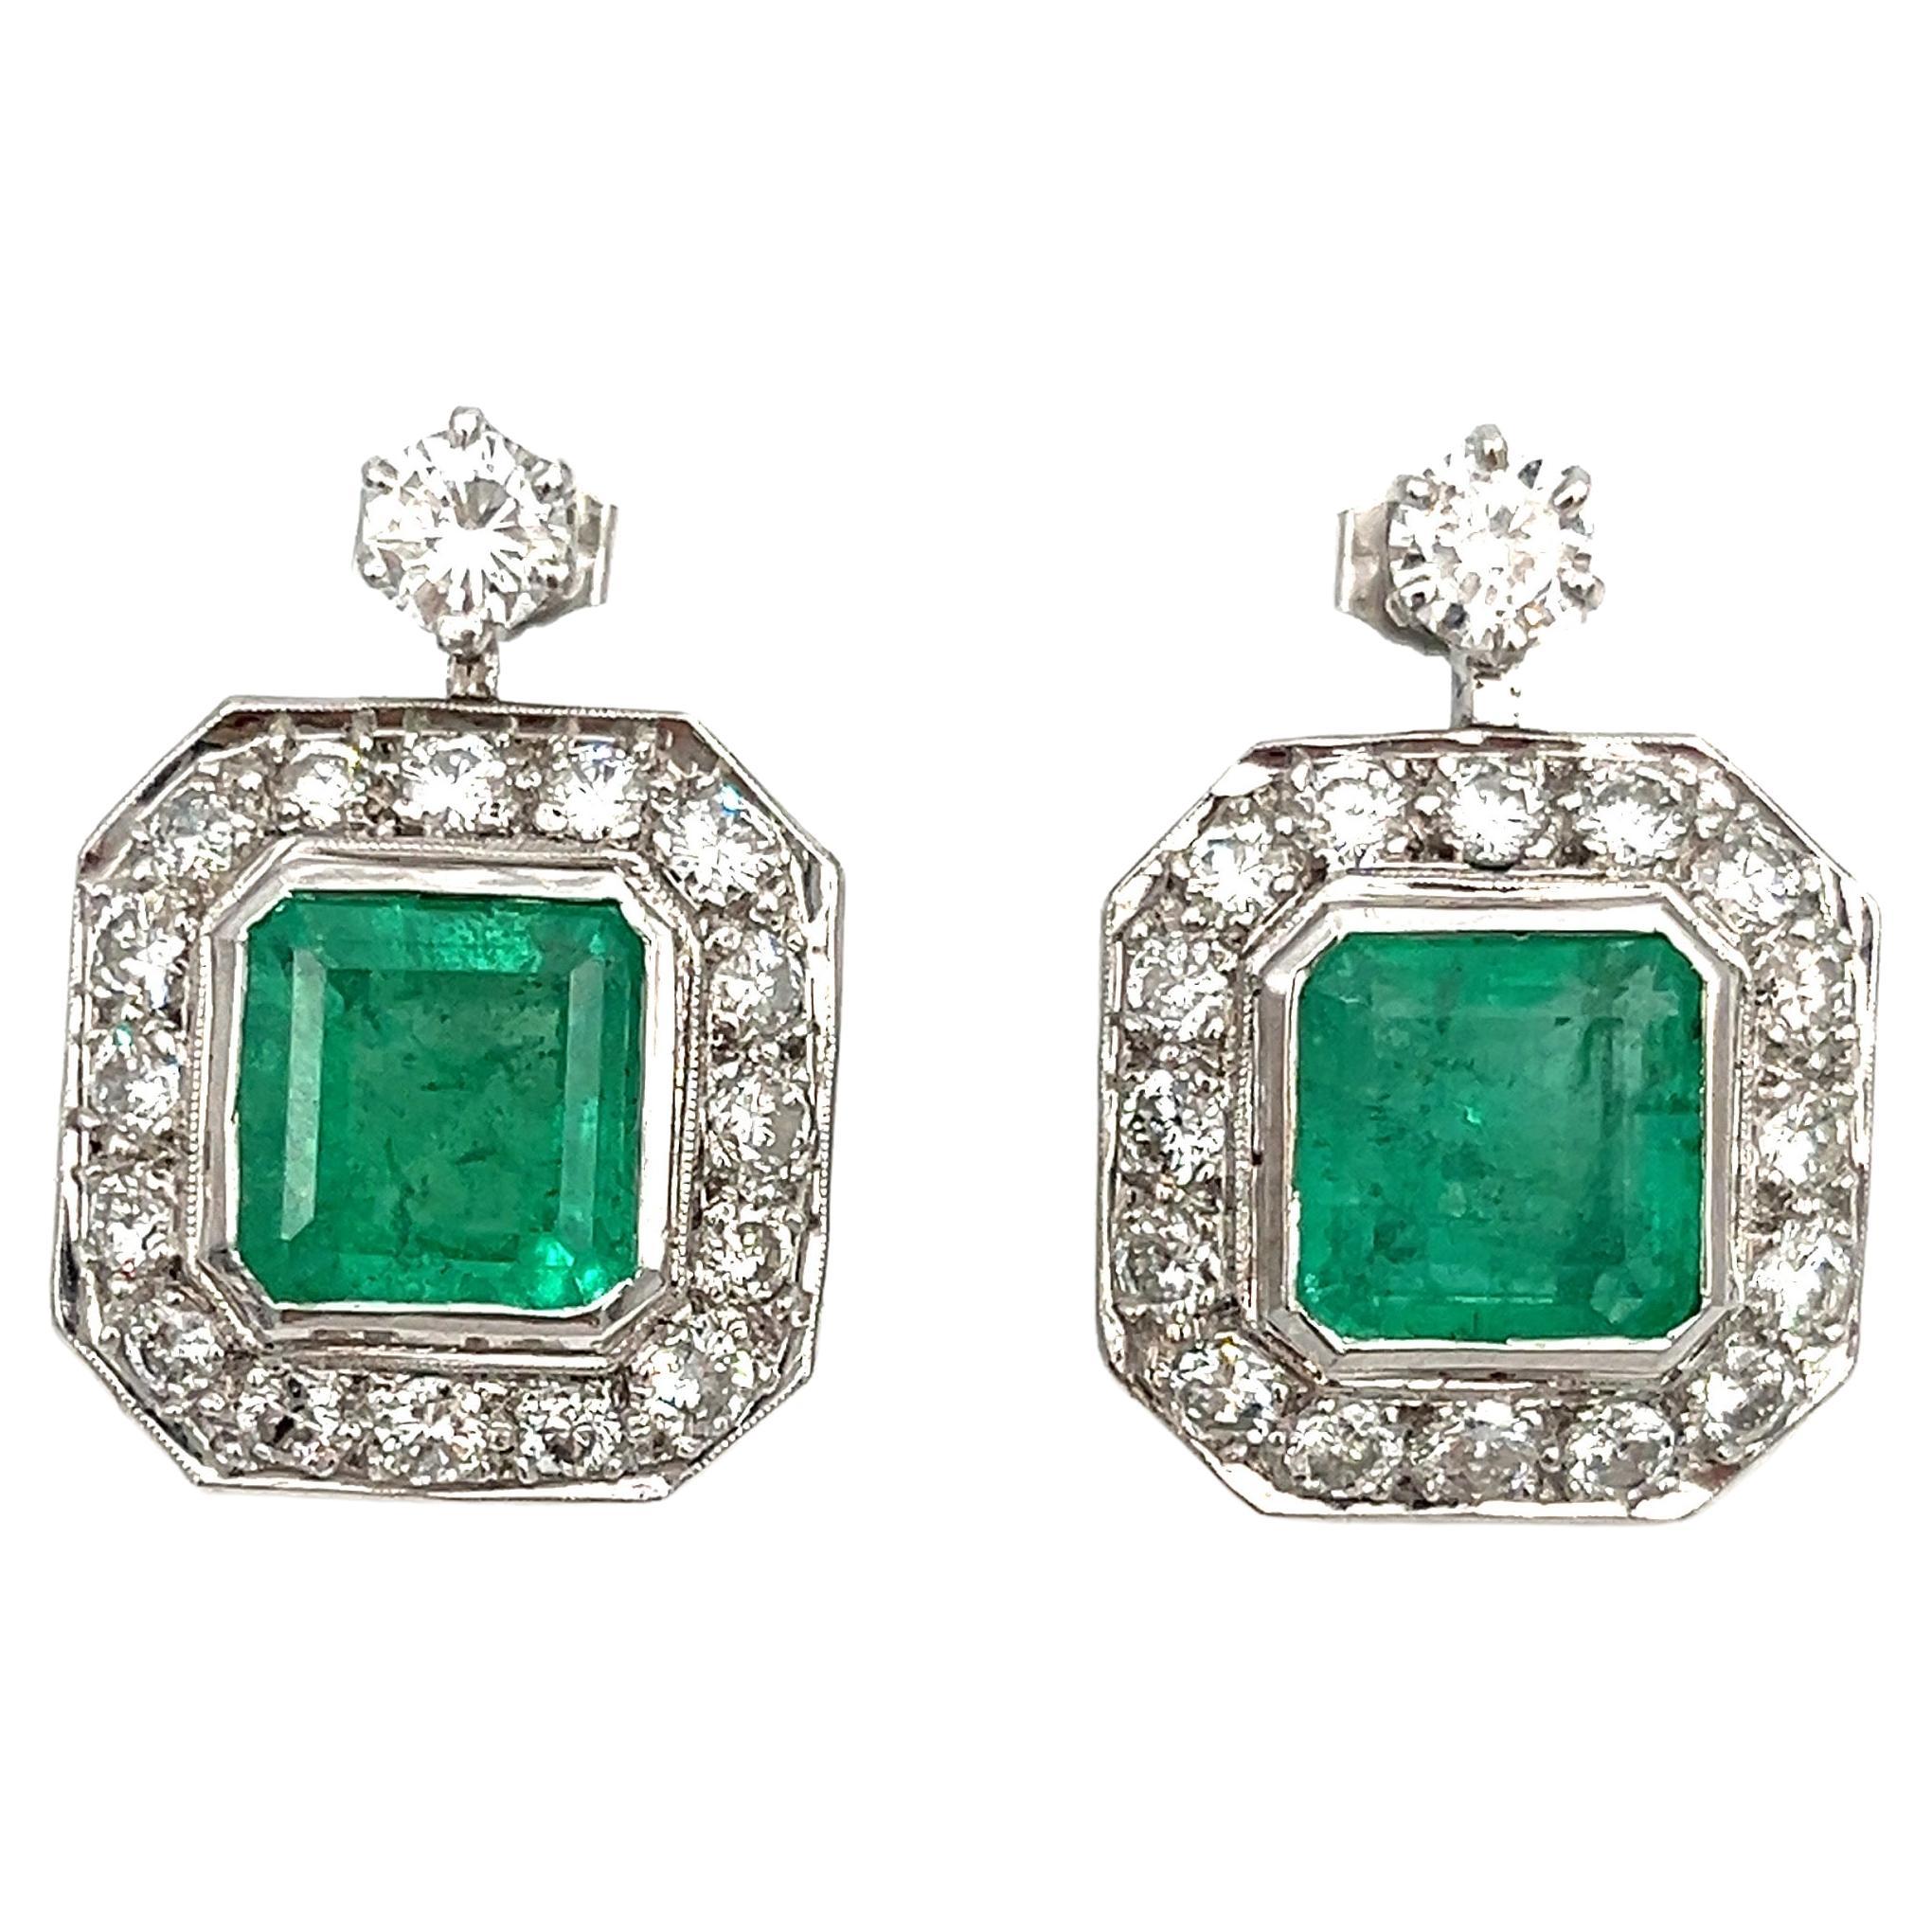 8.50 ct GIA Certified Colombian Emerald & Diamond Earrings